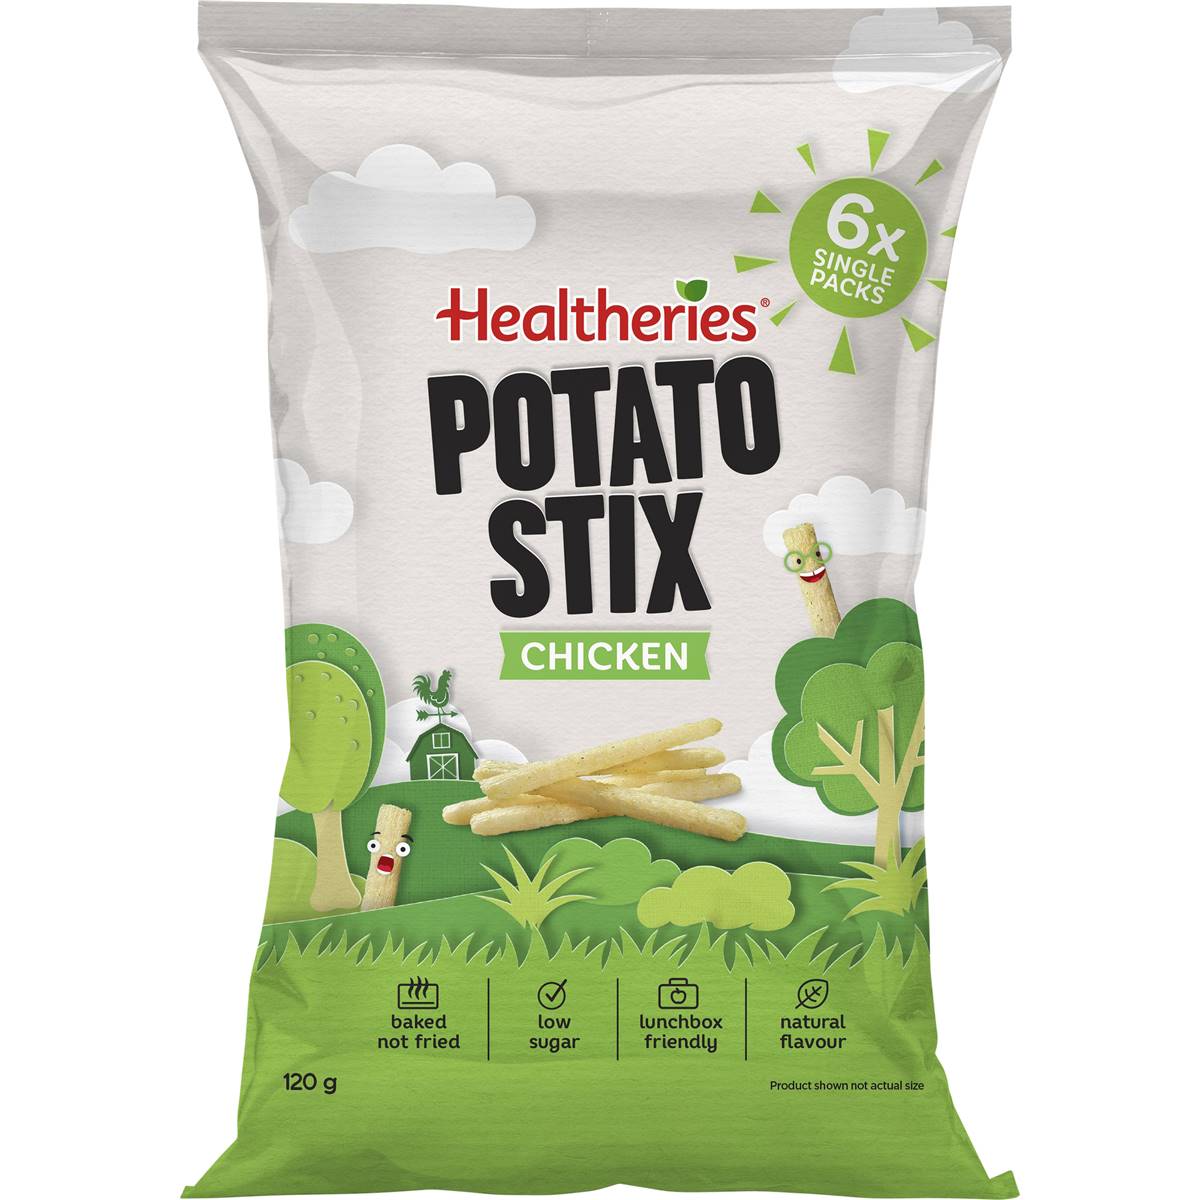 Healtheries Potato Stix Chicken Multipack Chips Kids Lunchbox Snacks 20g X 6 Pack